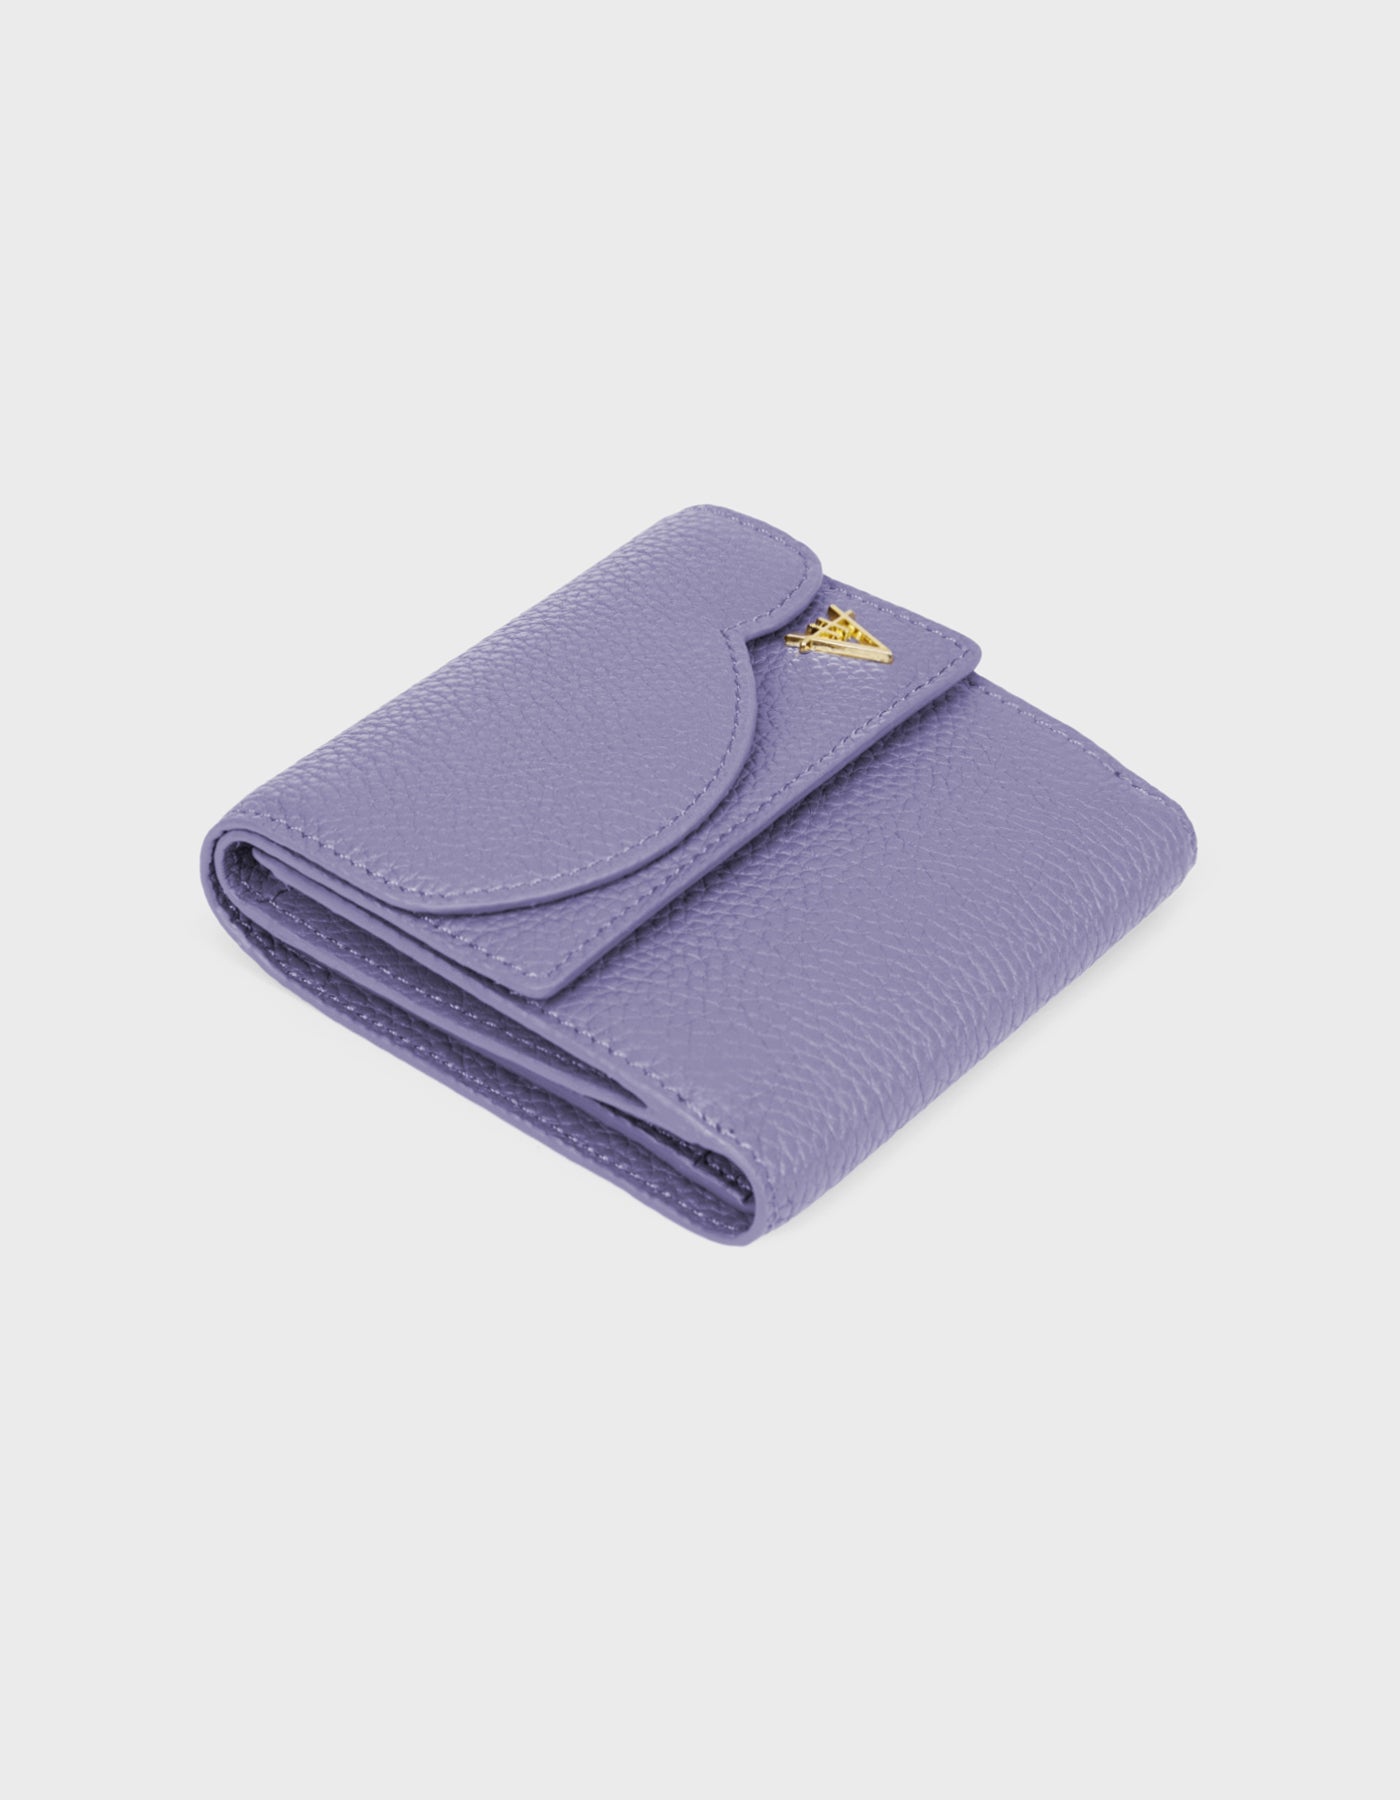 HiVa Atelier | Larus Compact Wallet Lavender | Beautiful and Versatile